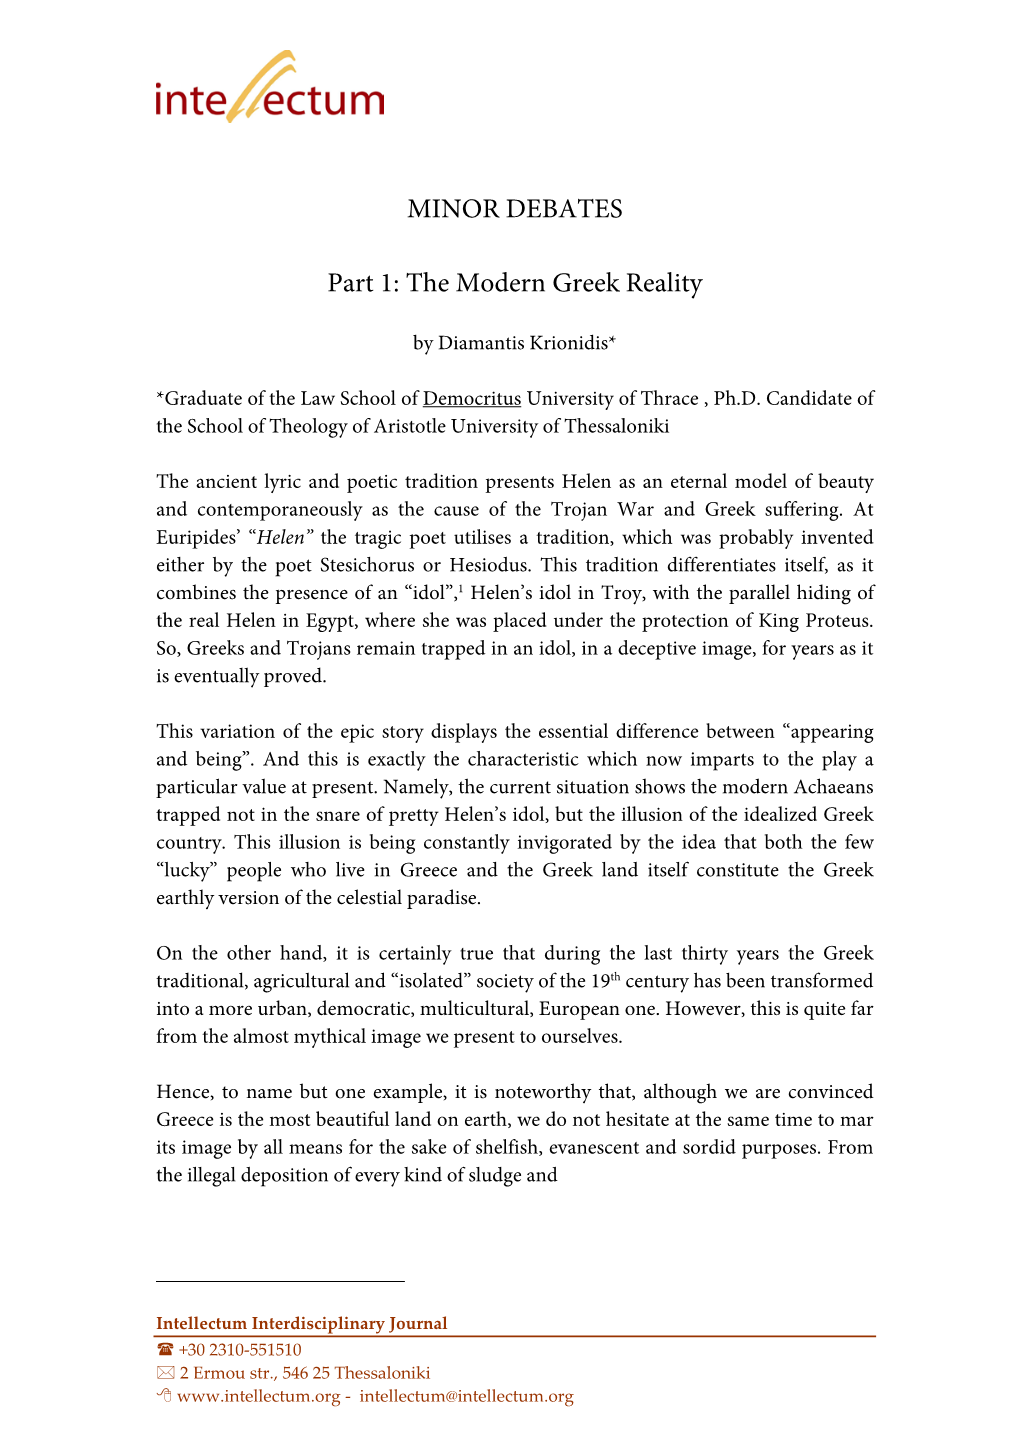 Minor Debates: Part 1.The Modern Greek Reality, Part 2